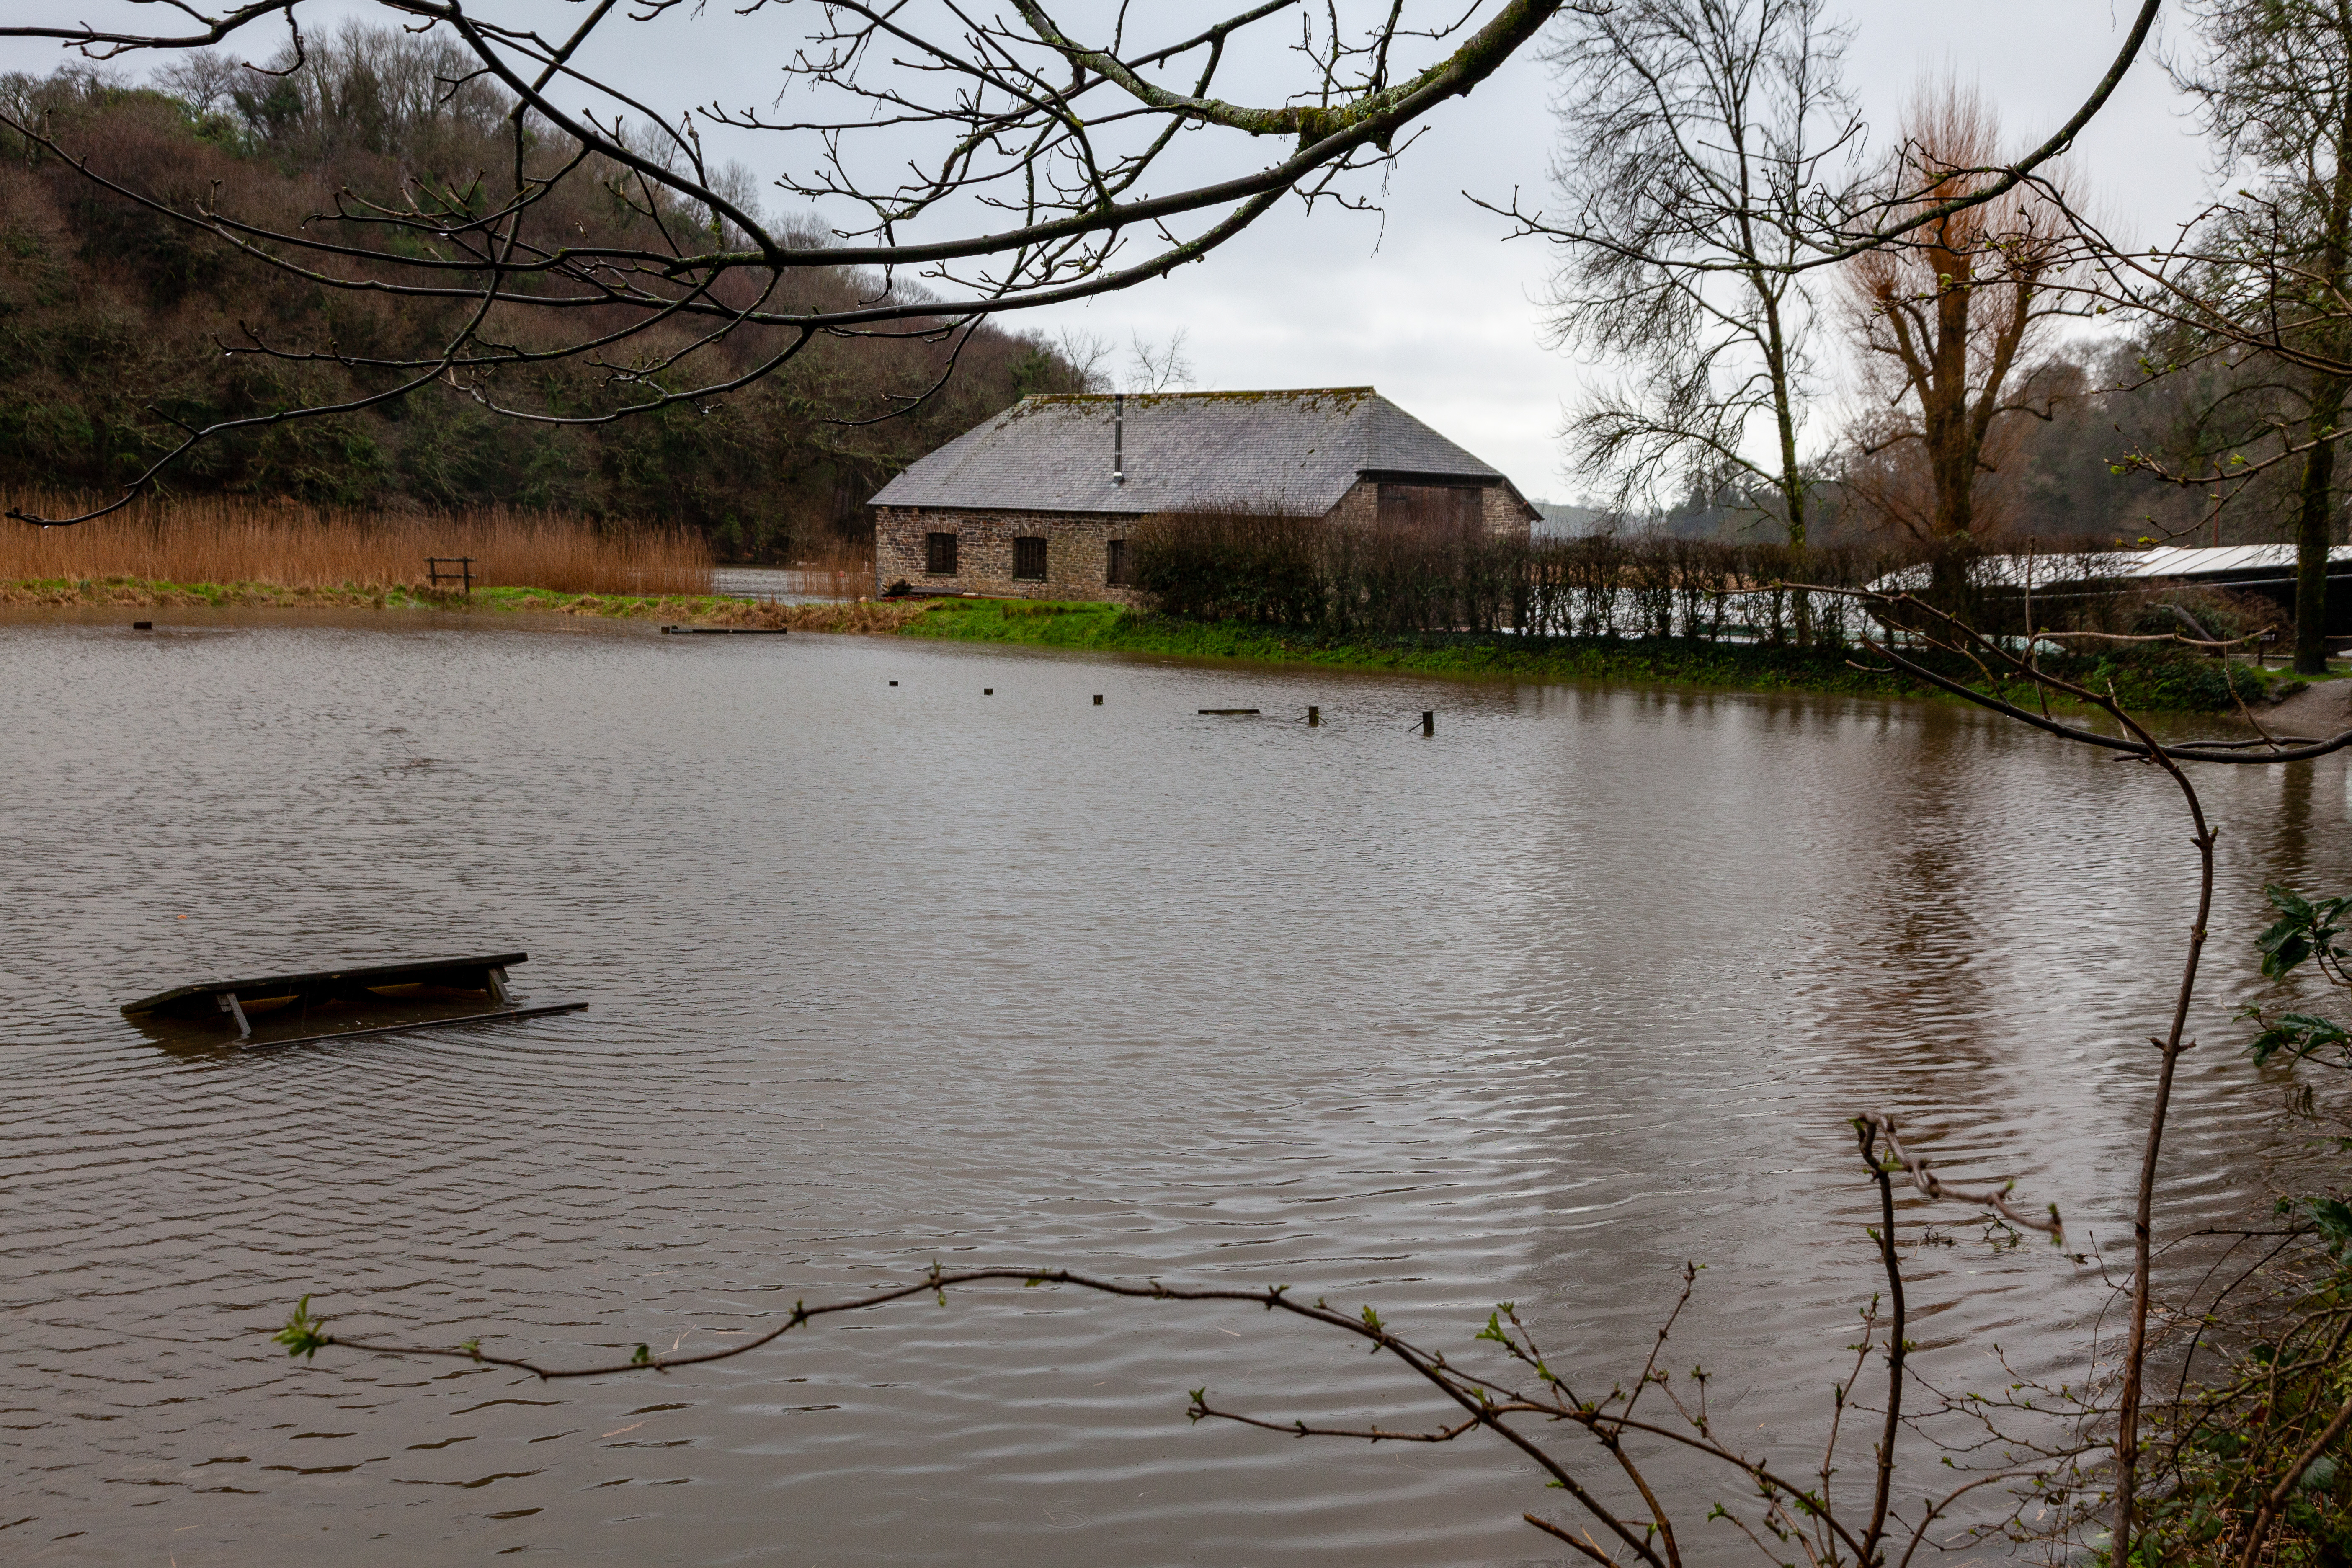 Flooding at Cotehele, Cornwall in February 2020